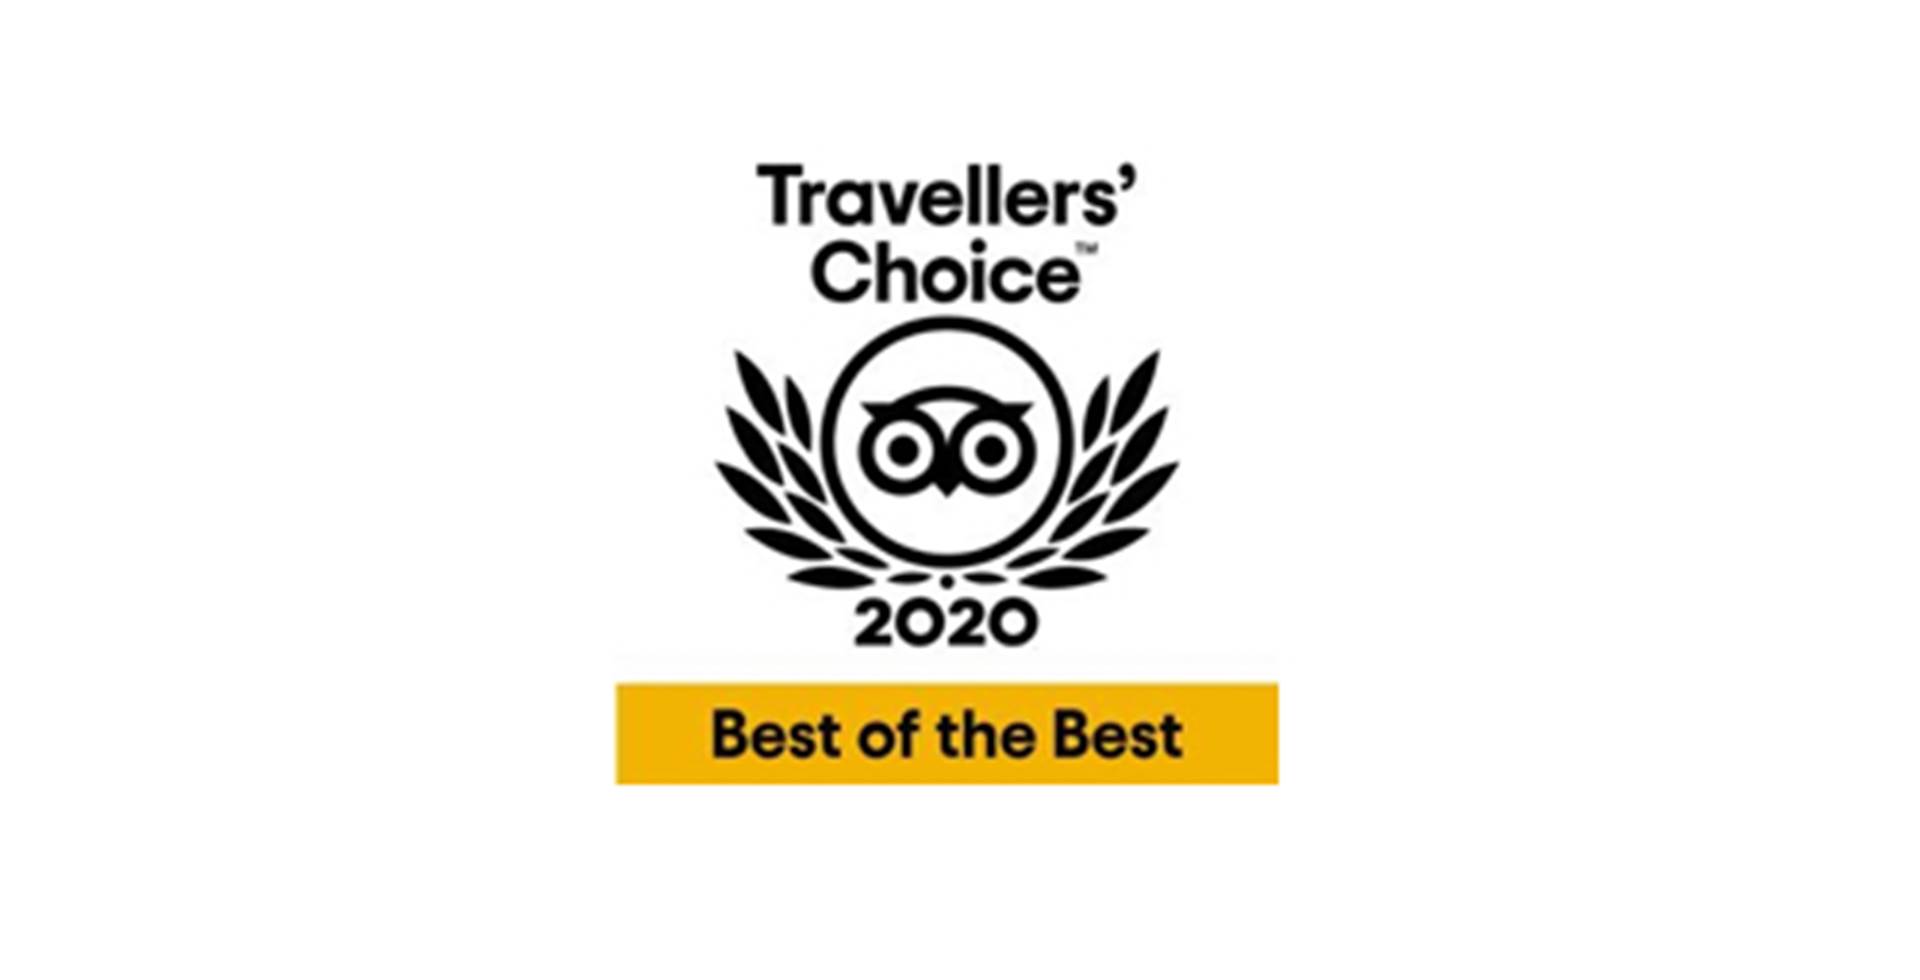 TripAdvisor Travellers Choice Best of the Best 2020